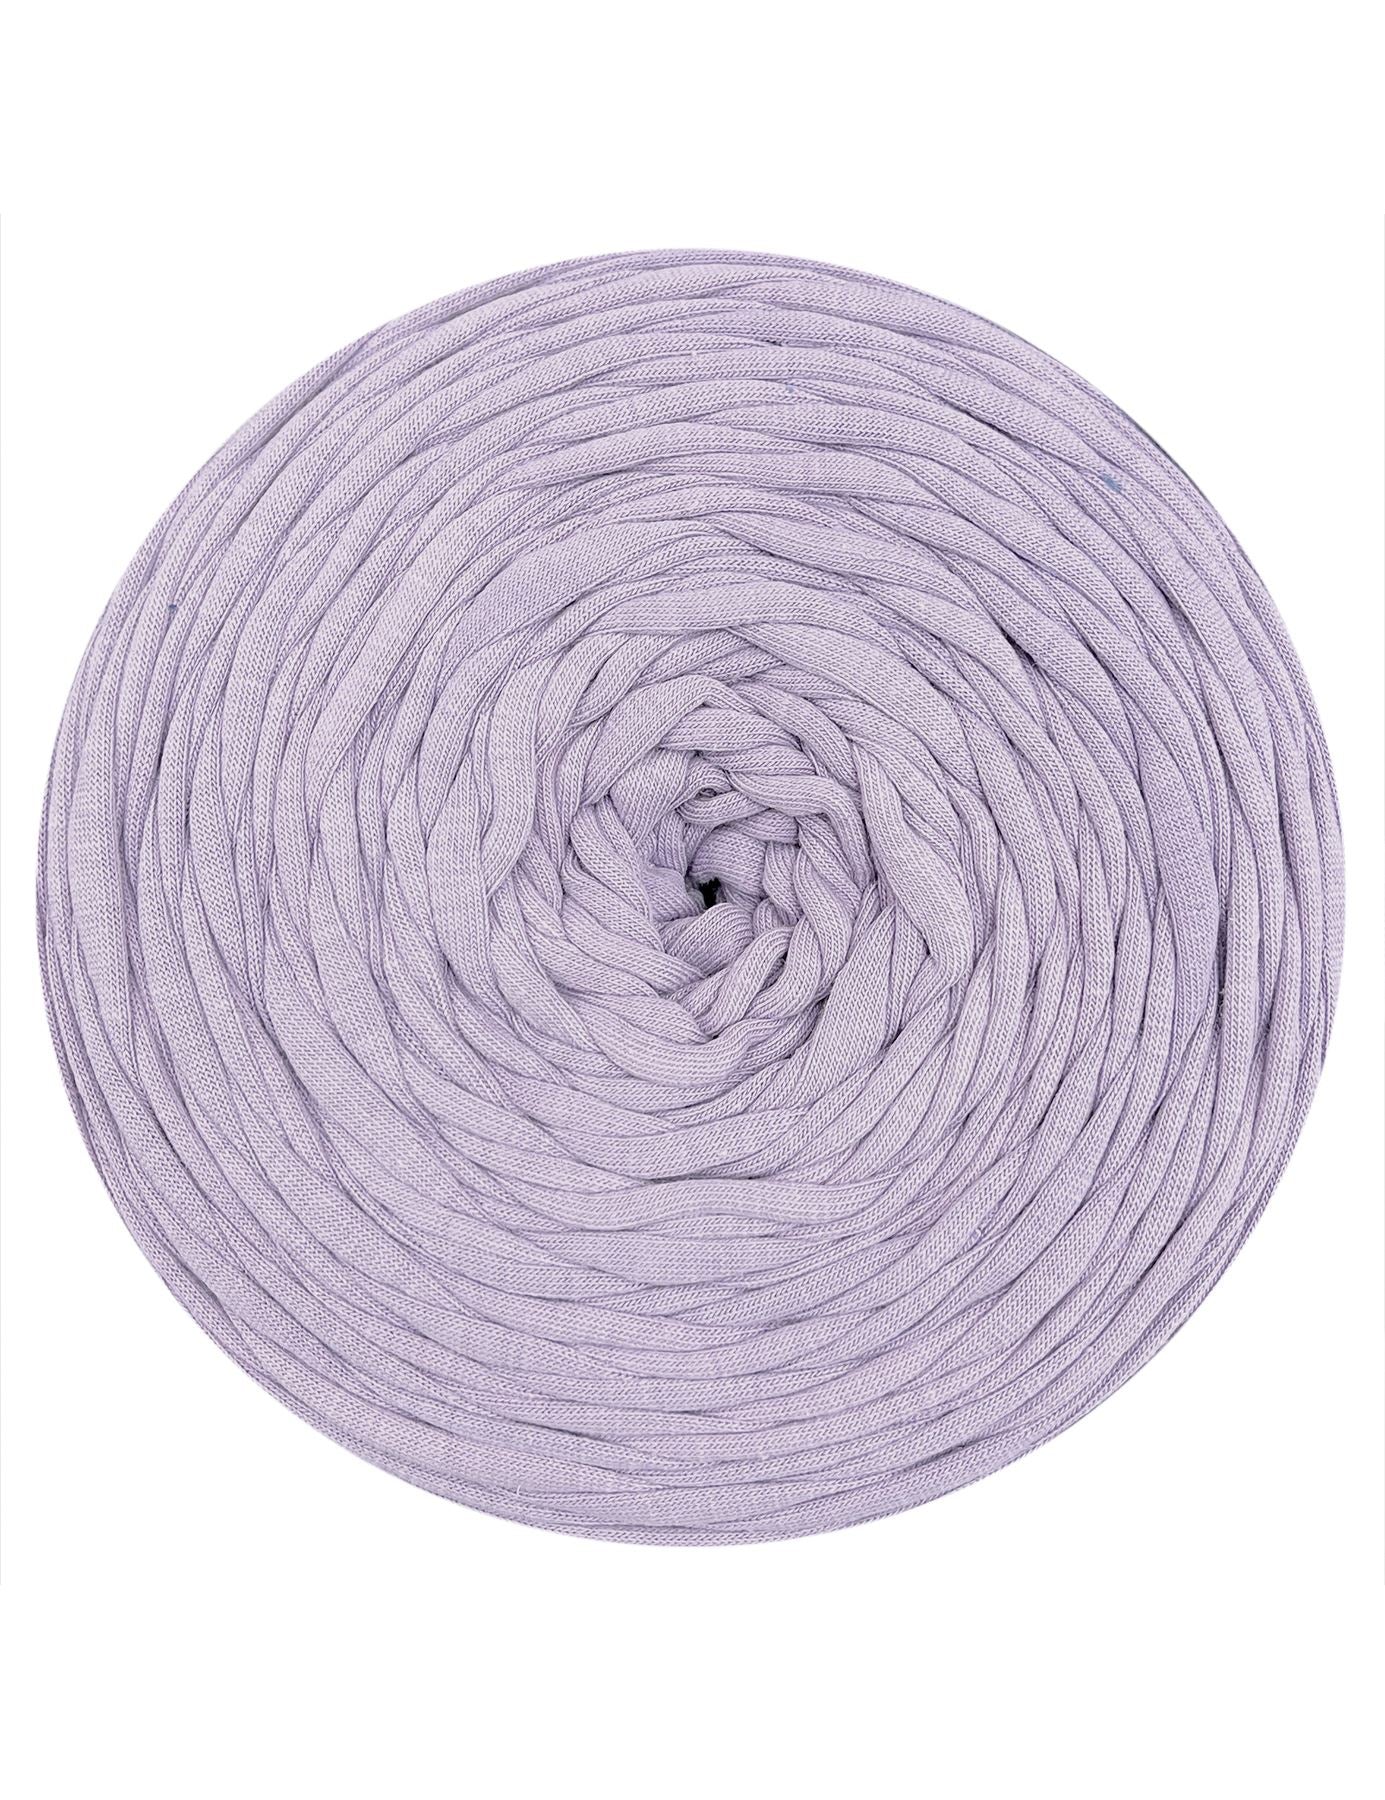 Pale heather purple t-shirt yarn (100-120m)